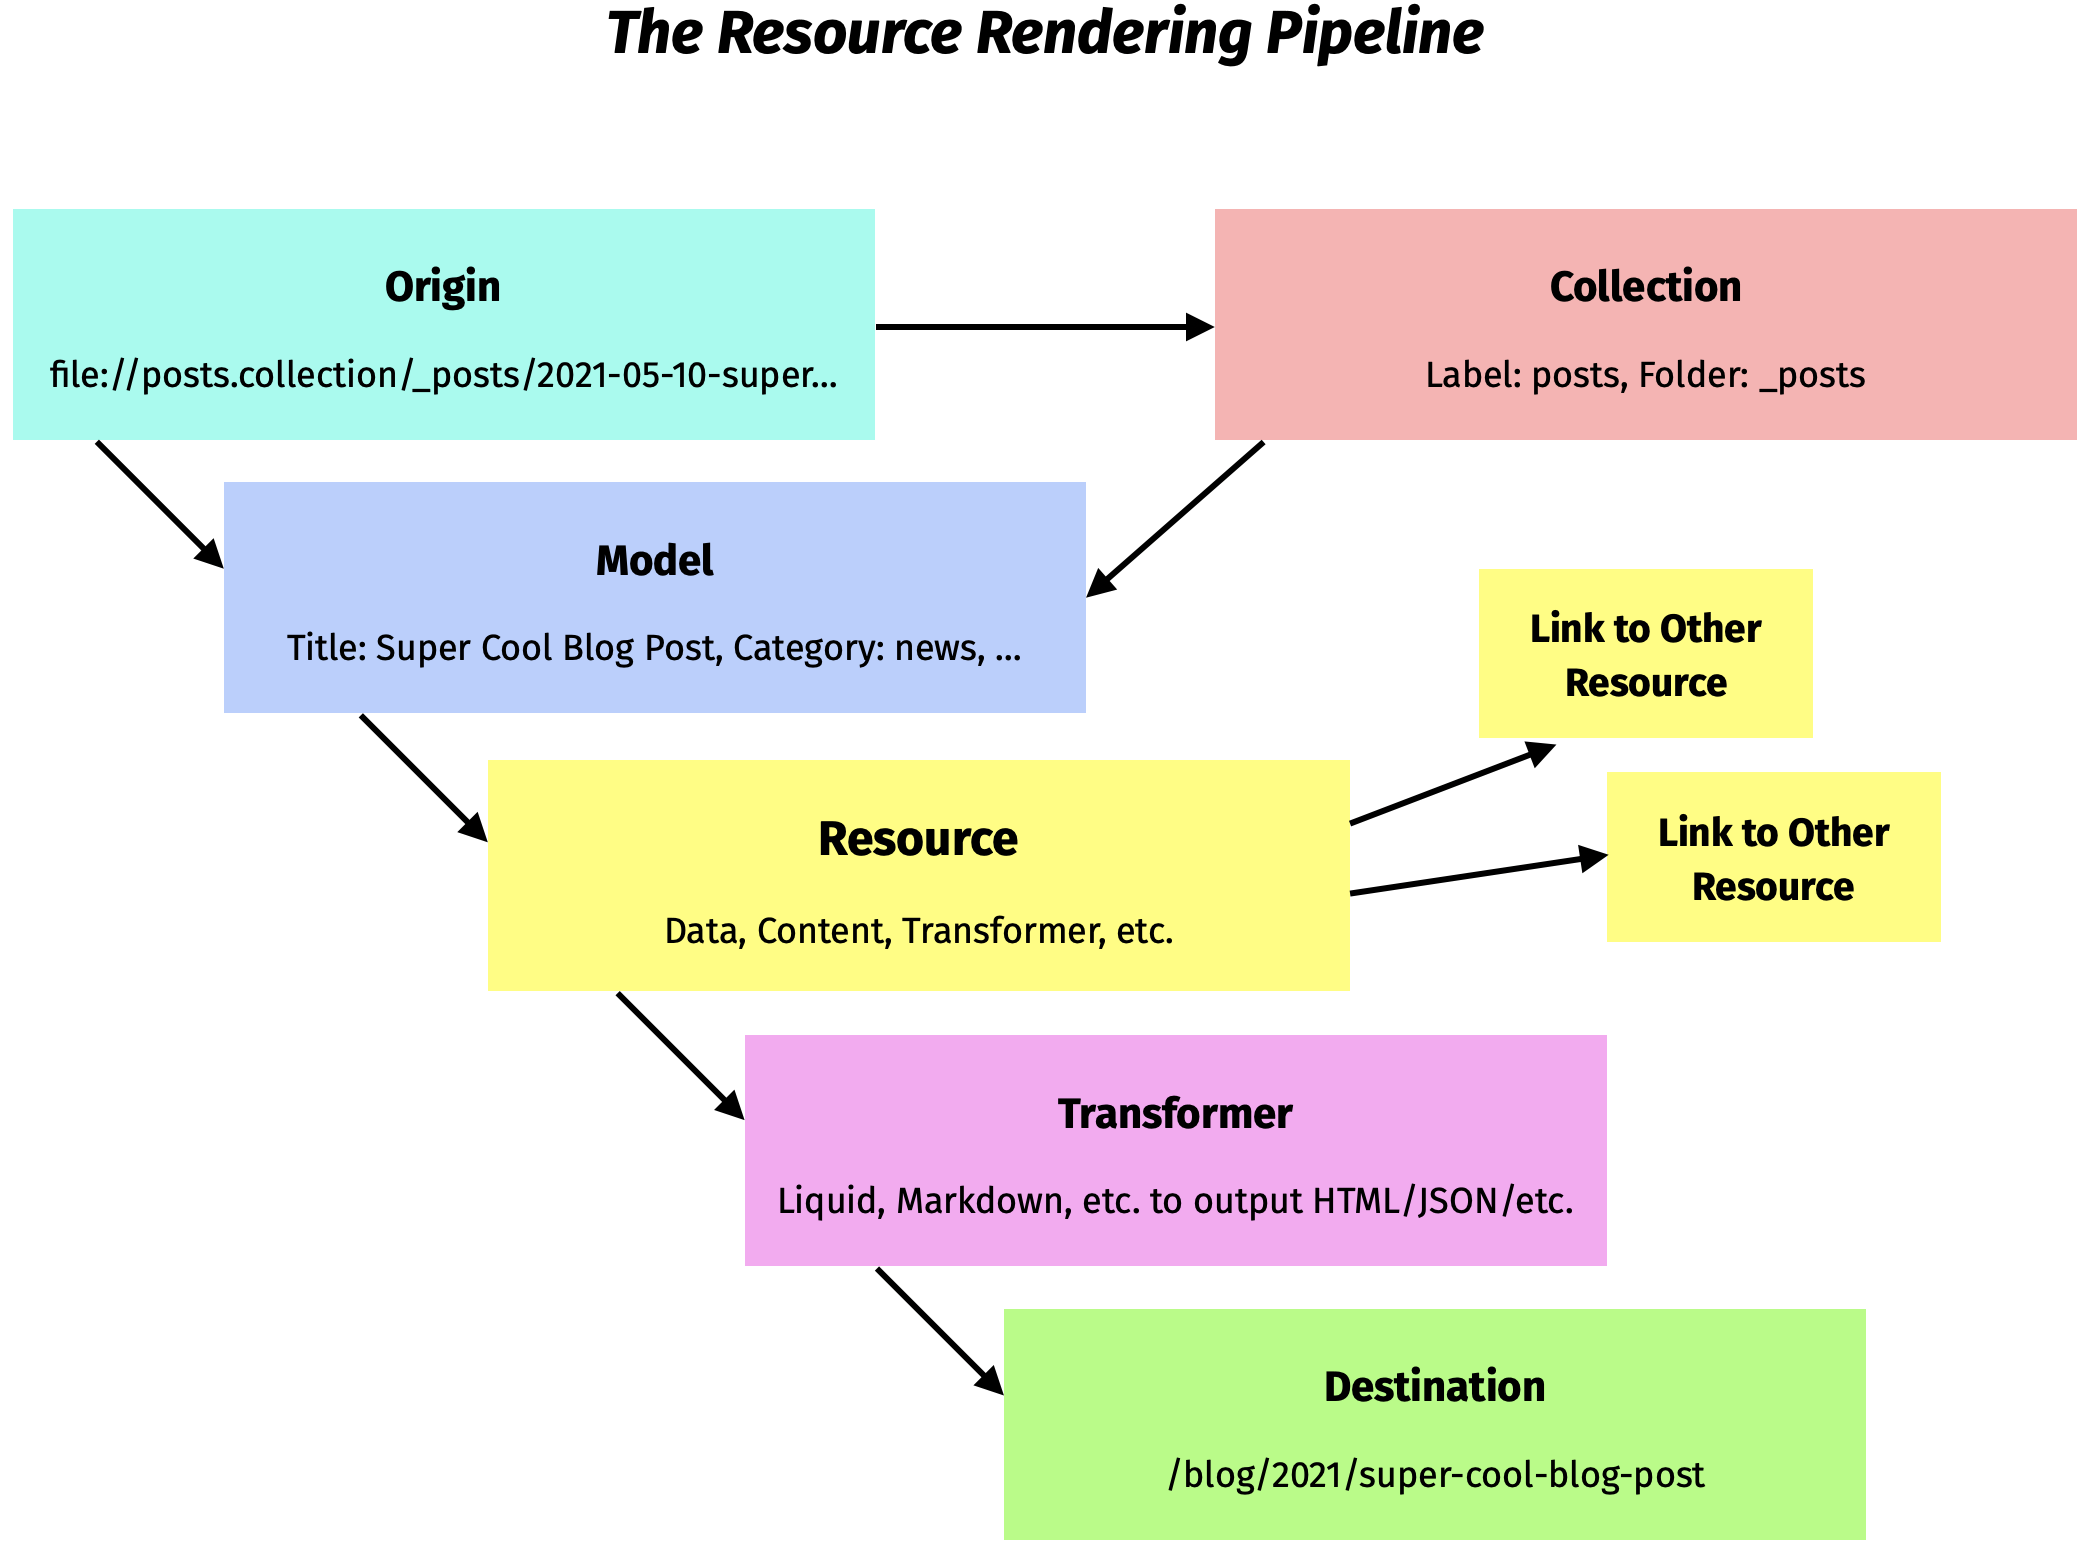 The Resource Rendering Pipeline